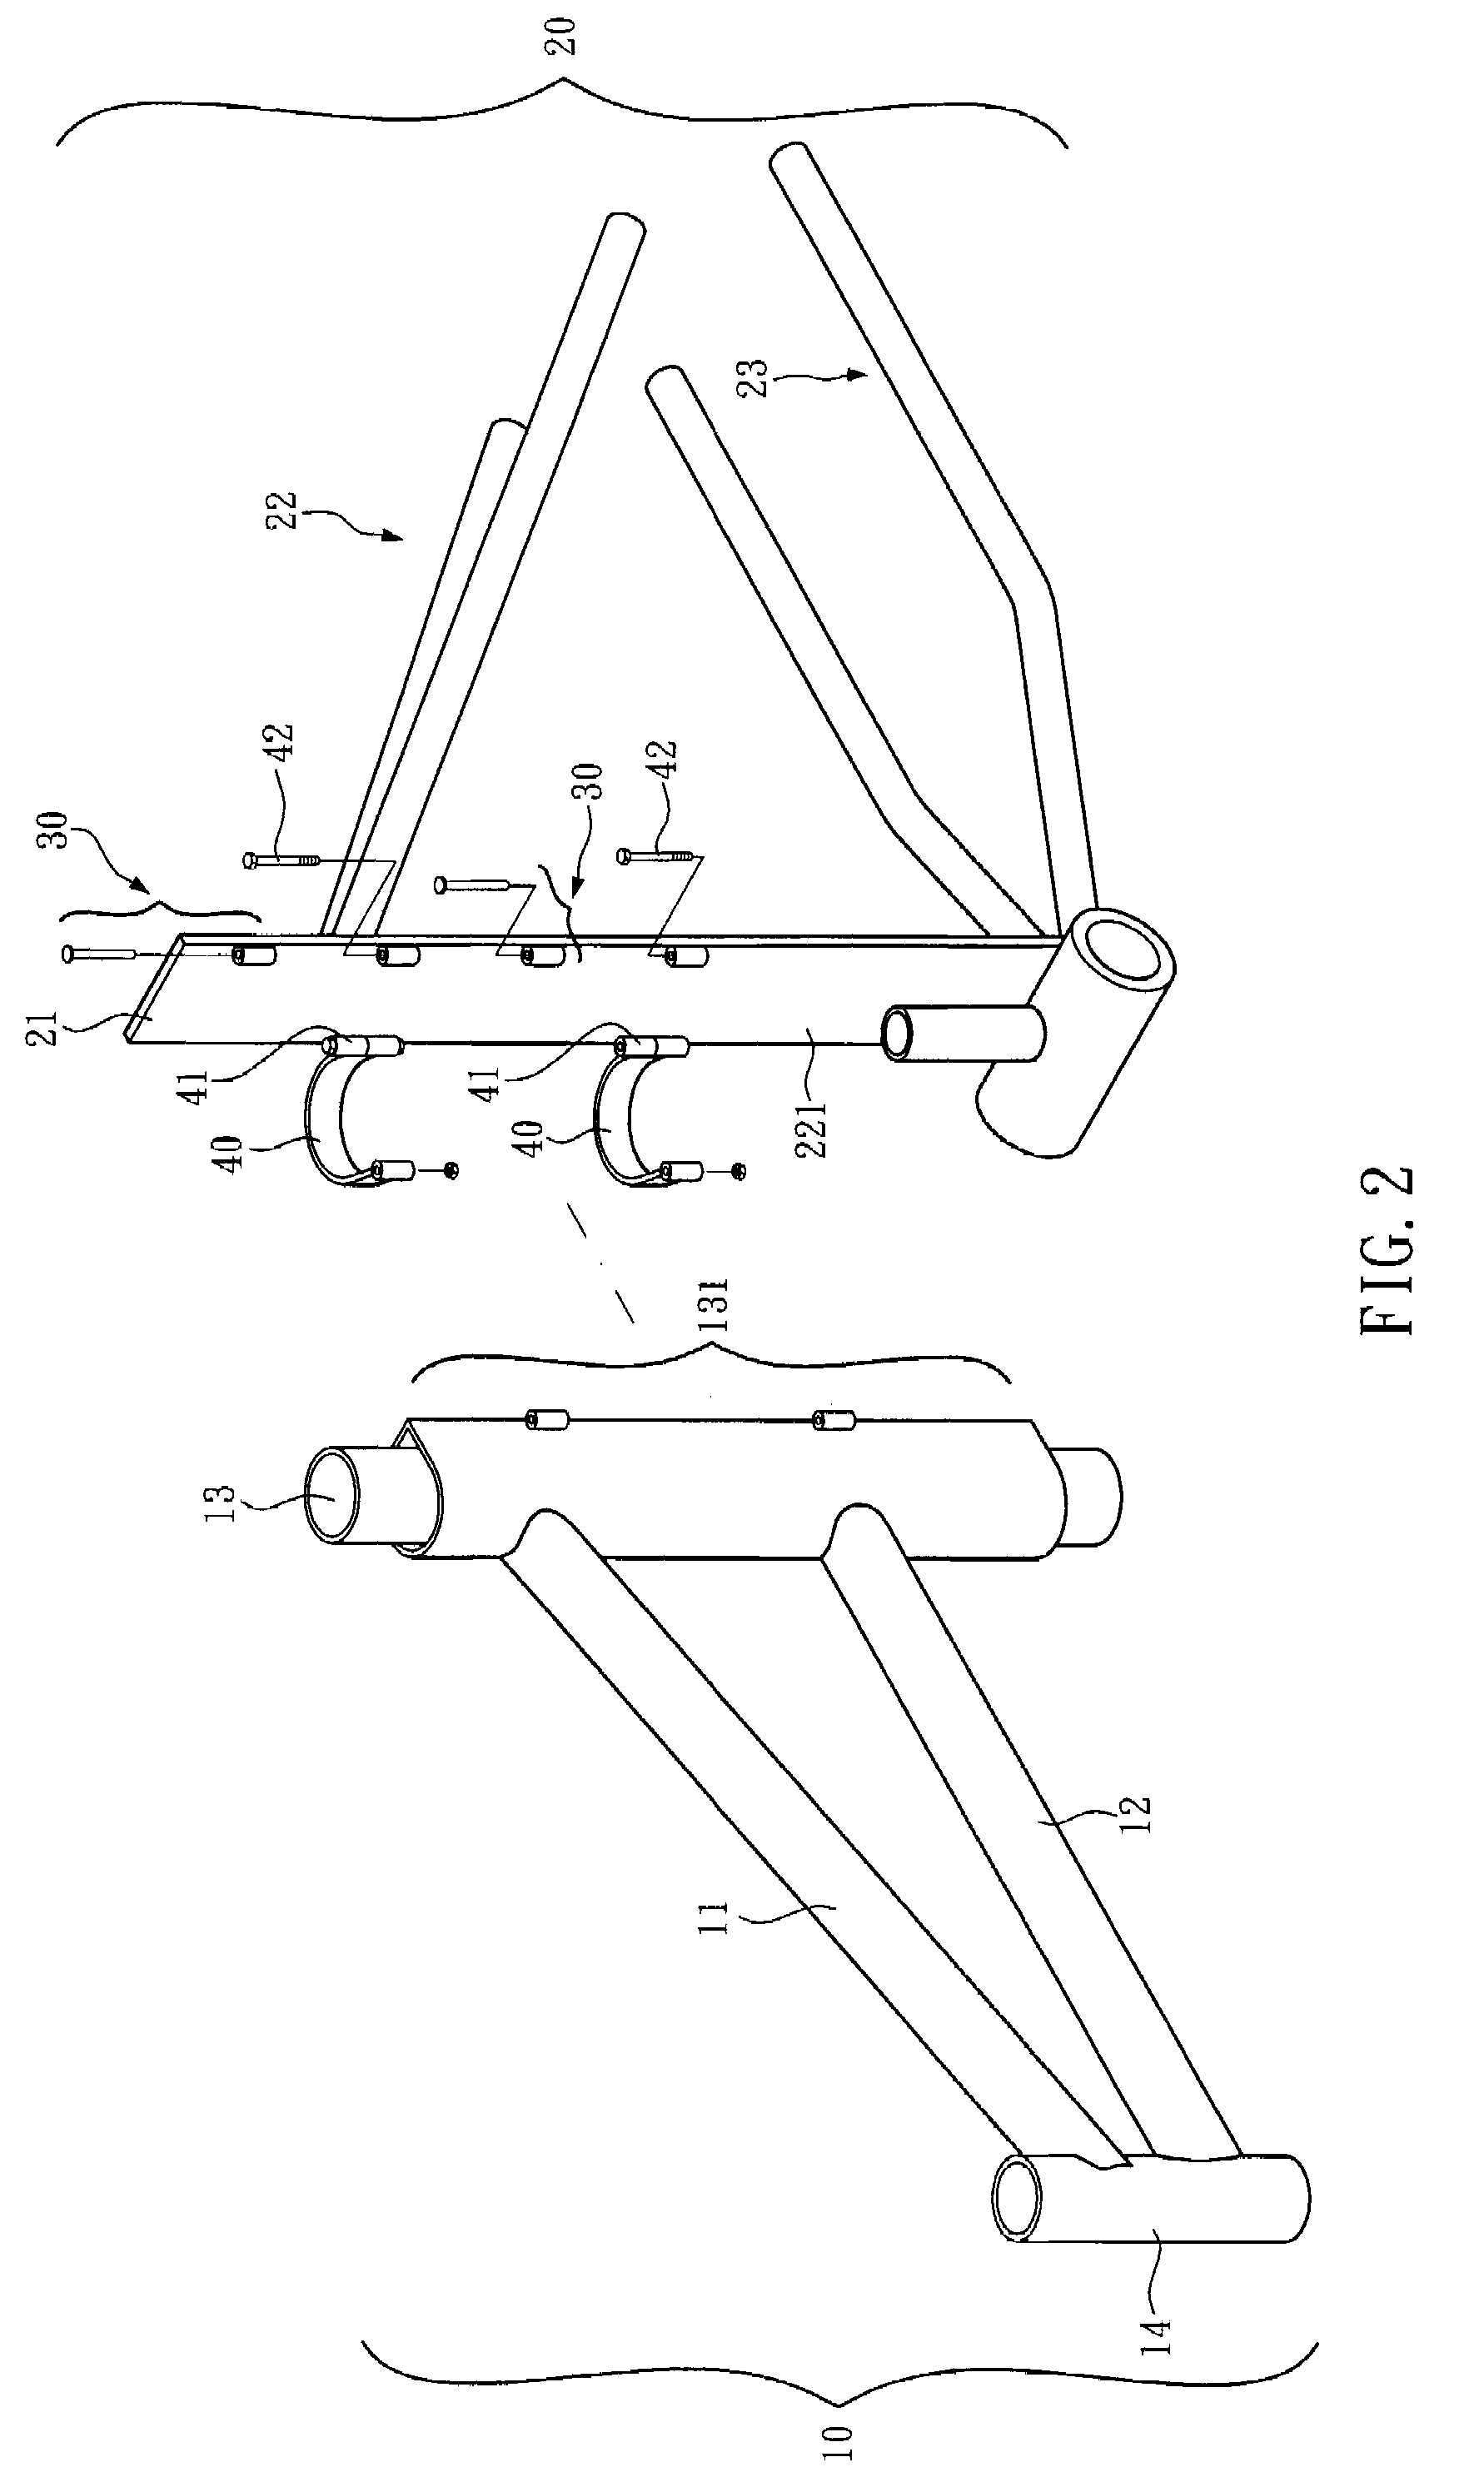 Folding mechanism